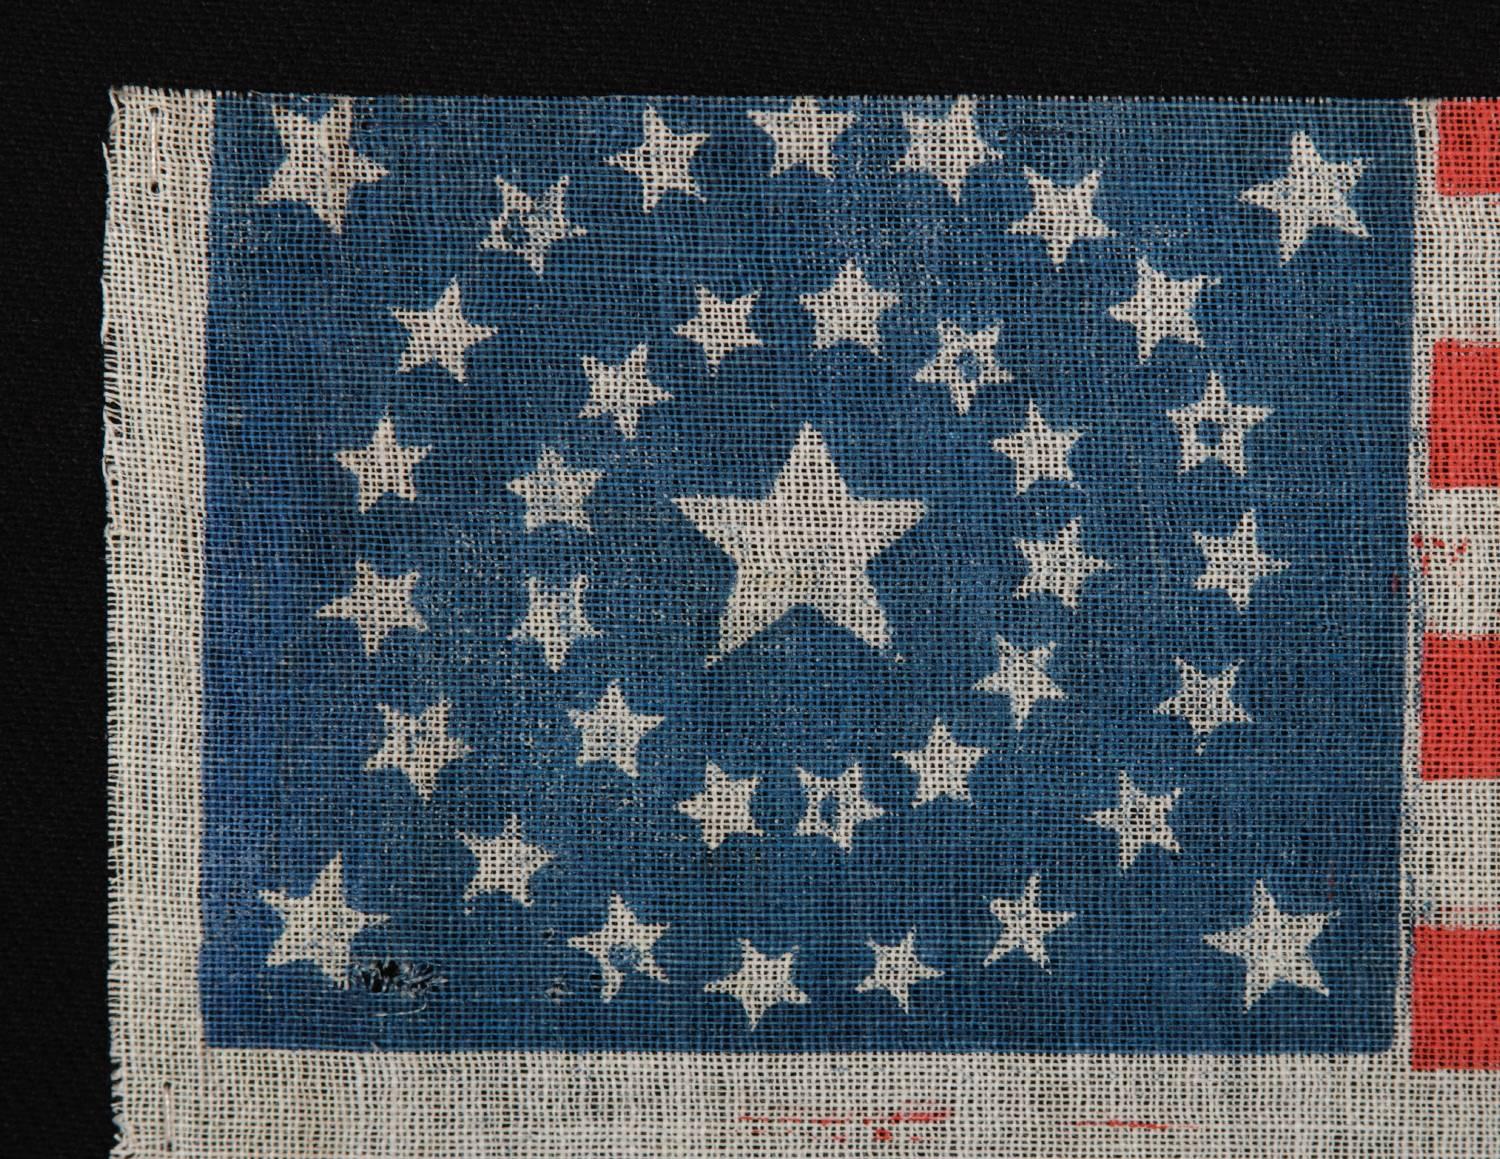 Mid-19th Century 37 Stars in a Wreath Pattern on an Antique Flag, 1867-1876, Nebraska Statehood